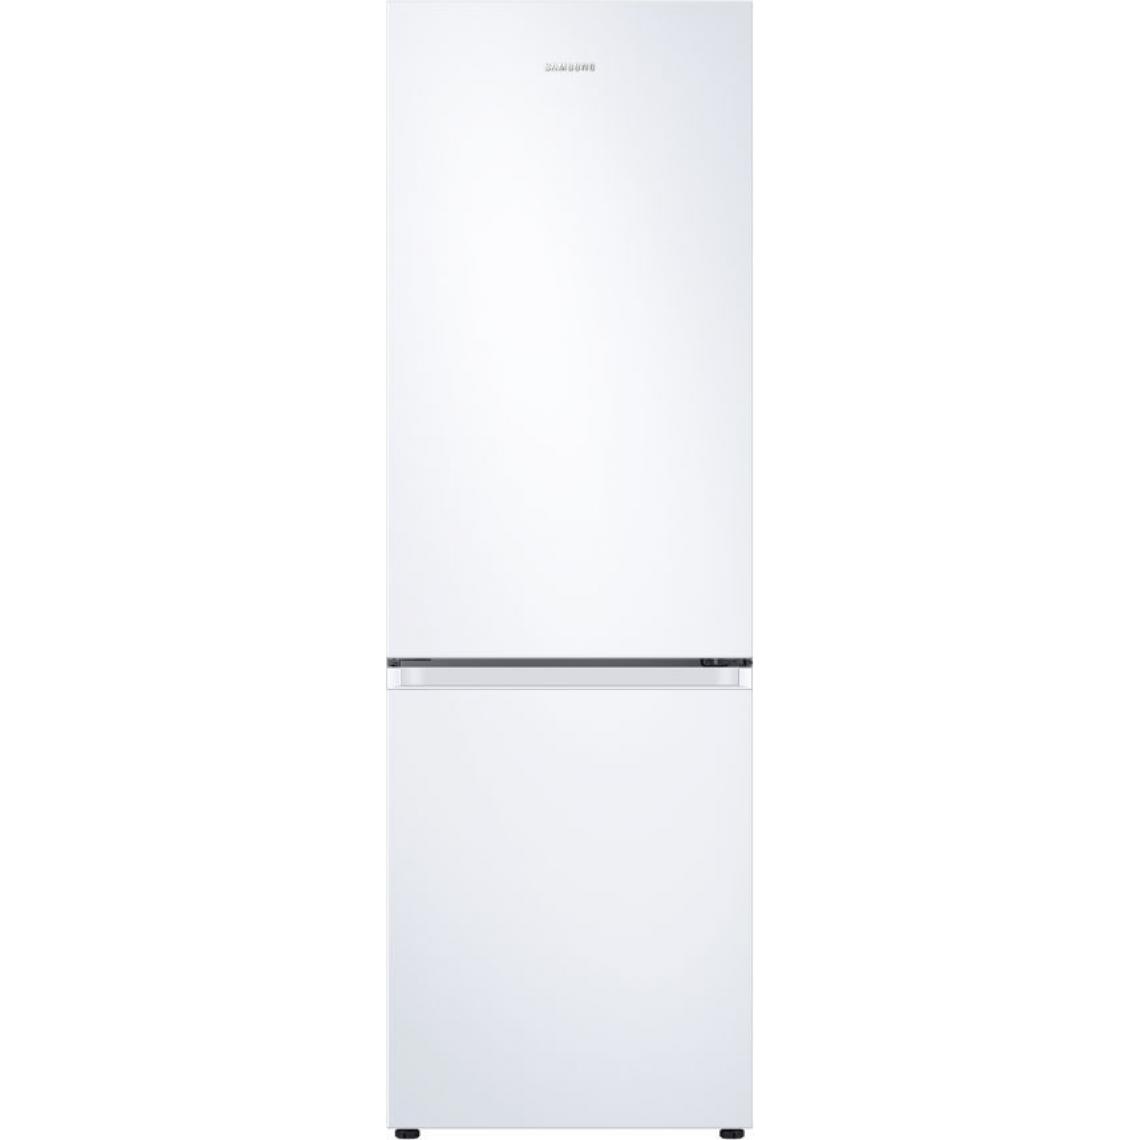 Samsung - samsung - rb3ct602eww - Réfrigérateur